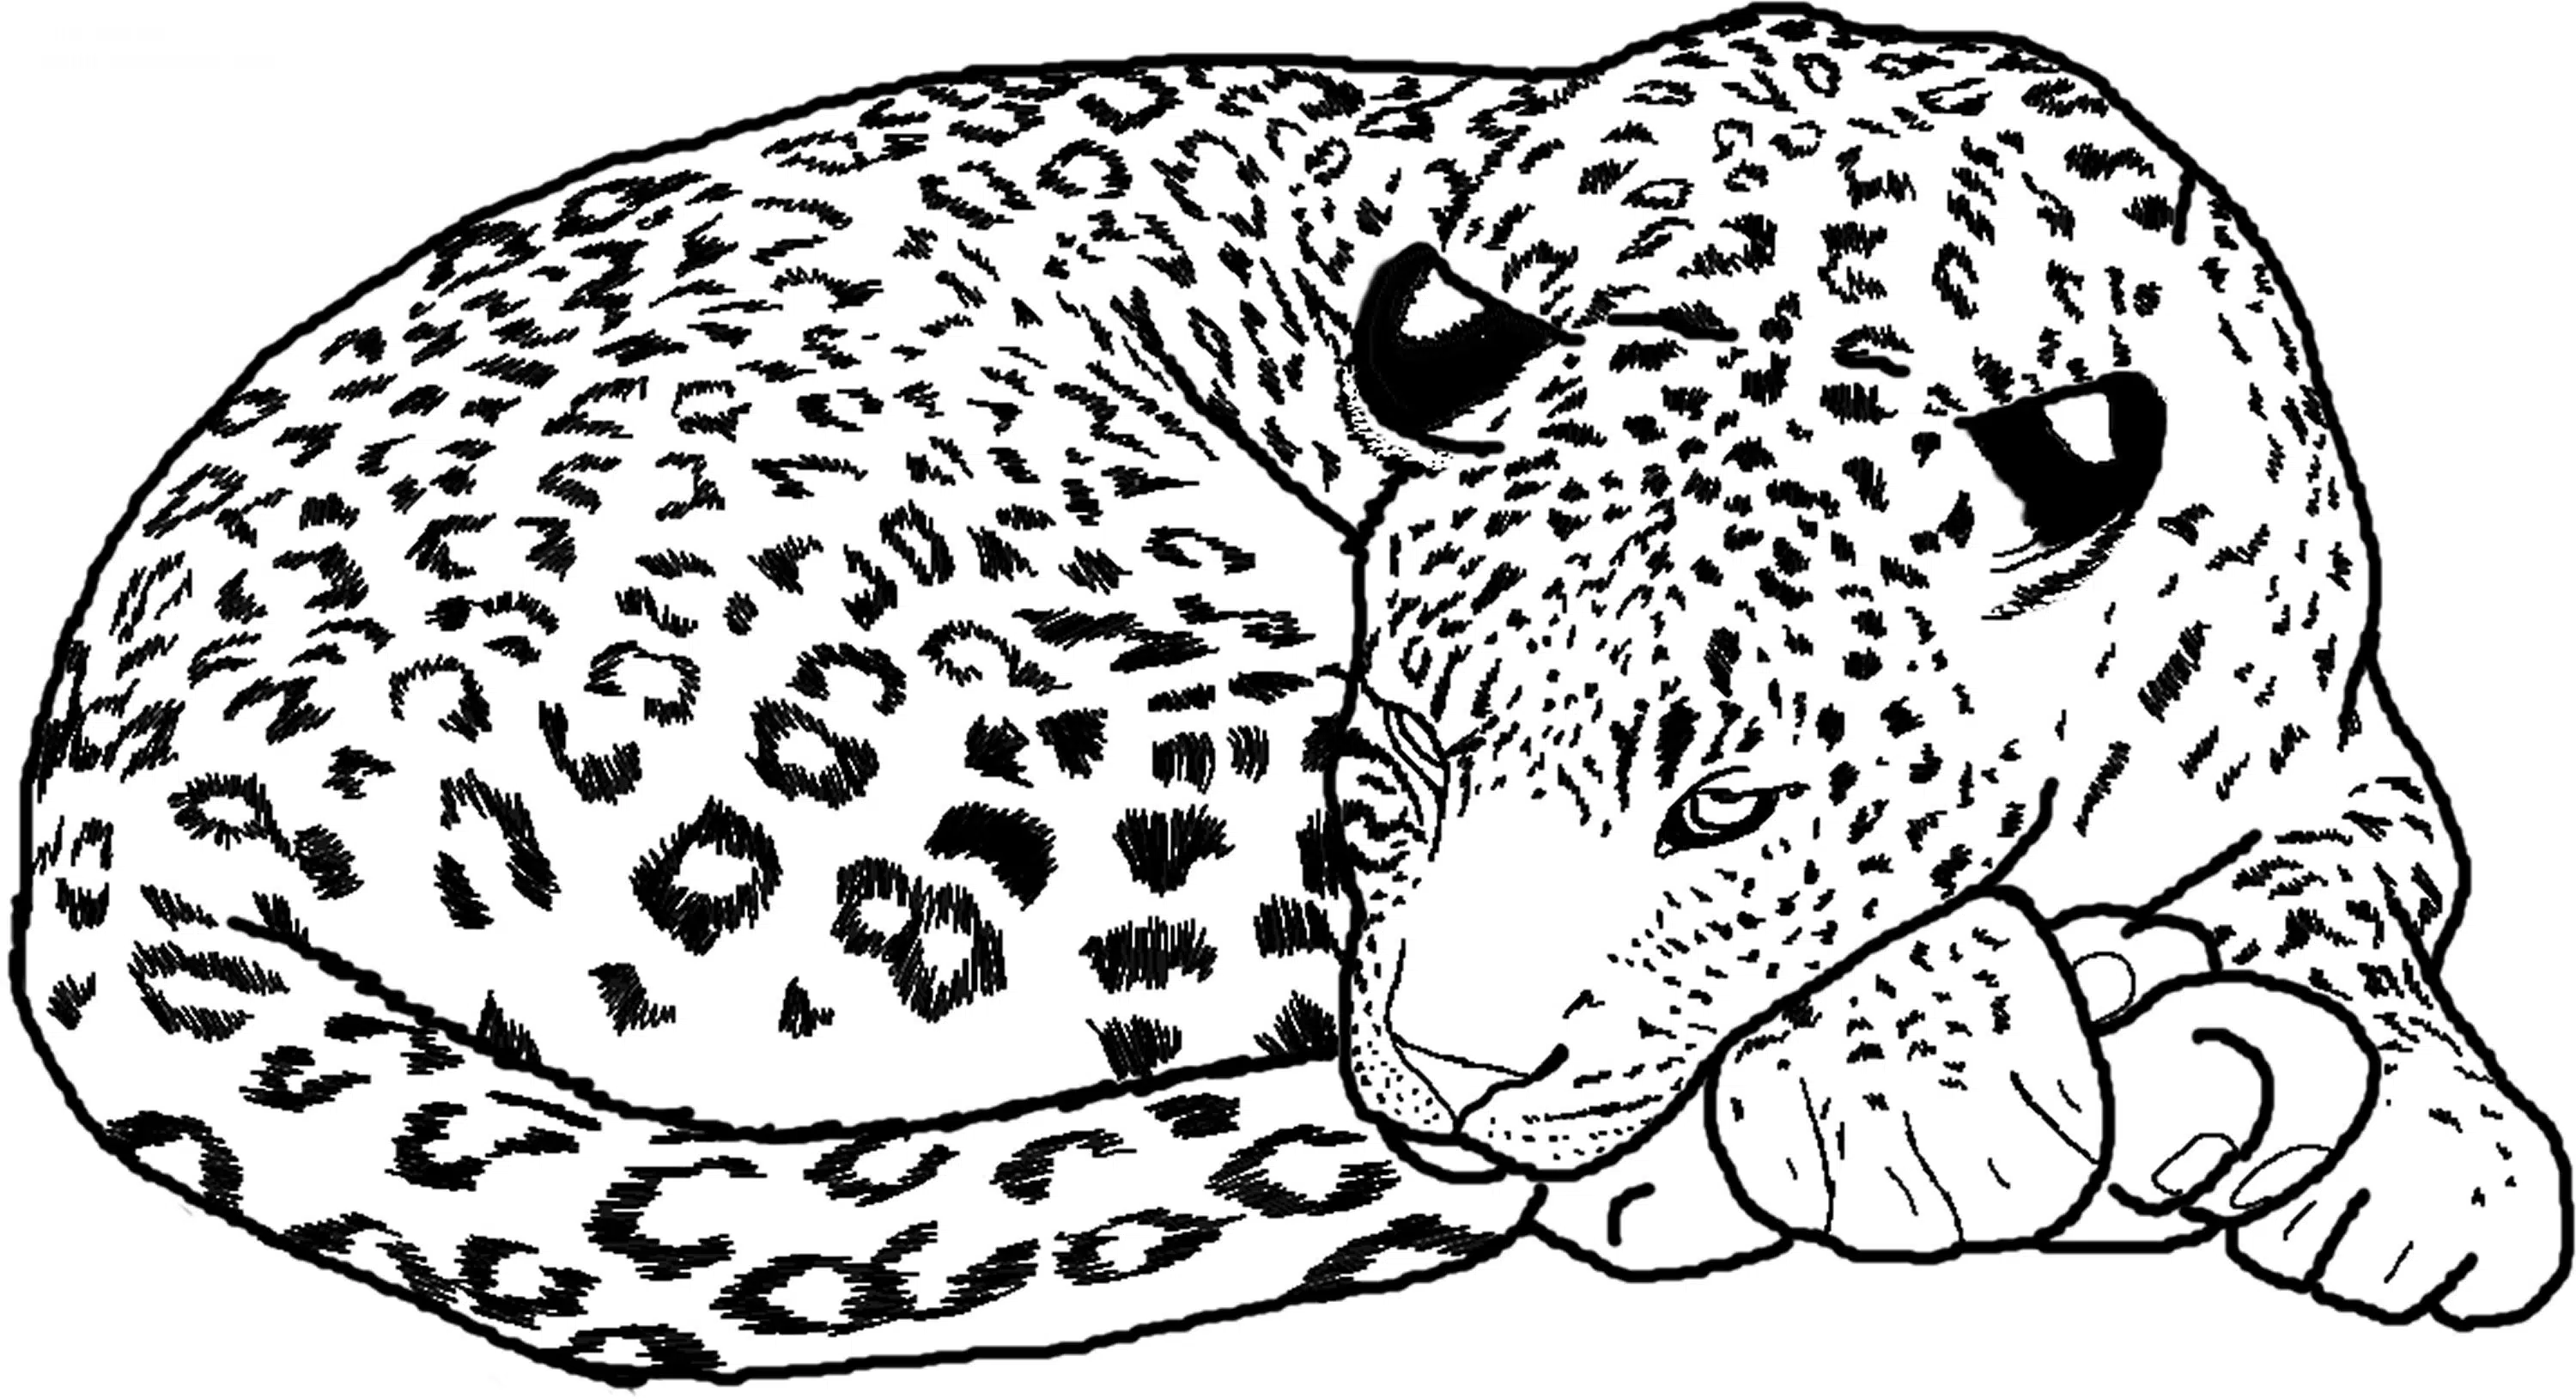 Leopard 12